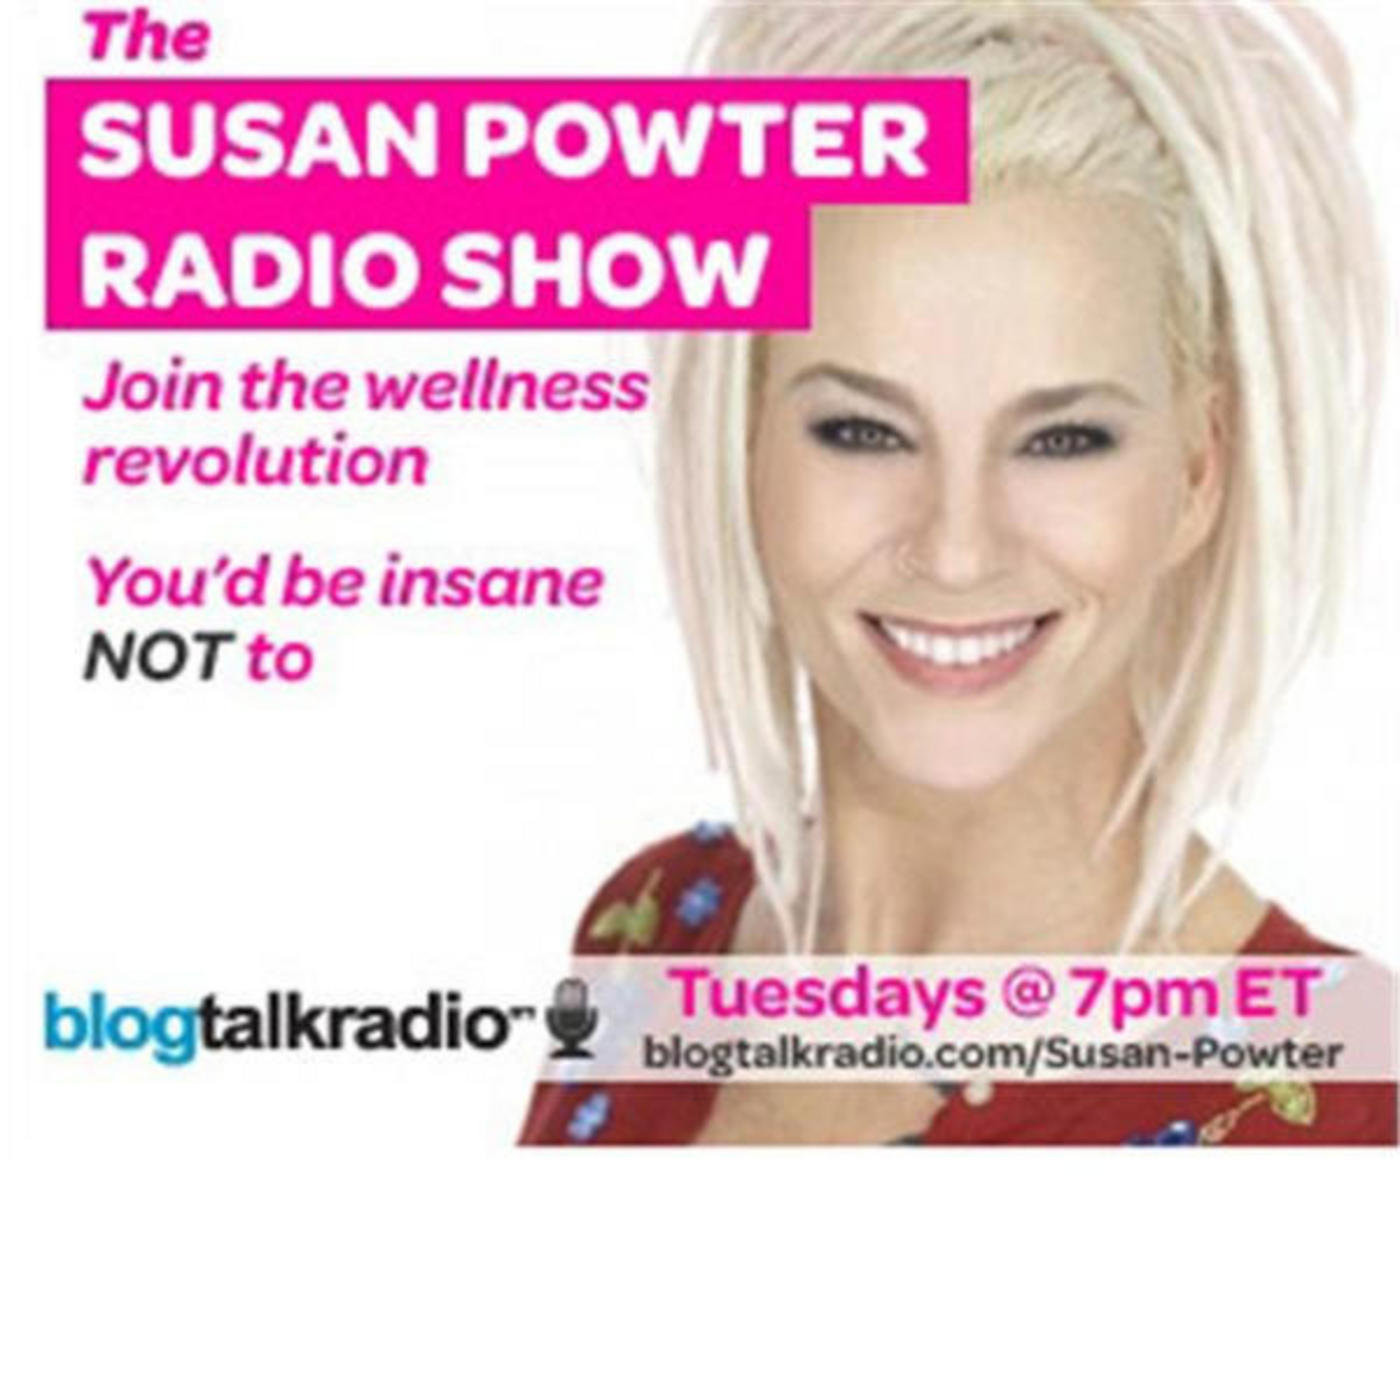 The Susan Powter Radio Show - Podcast en iVoox.